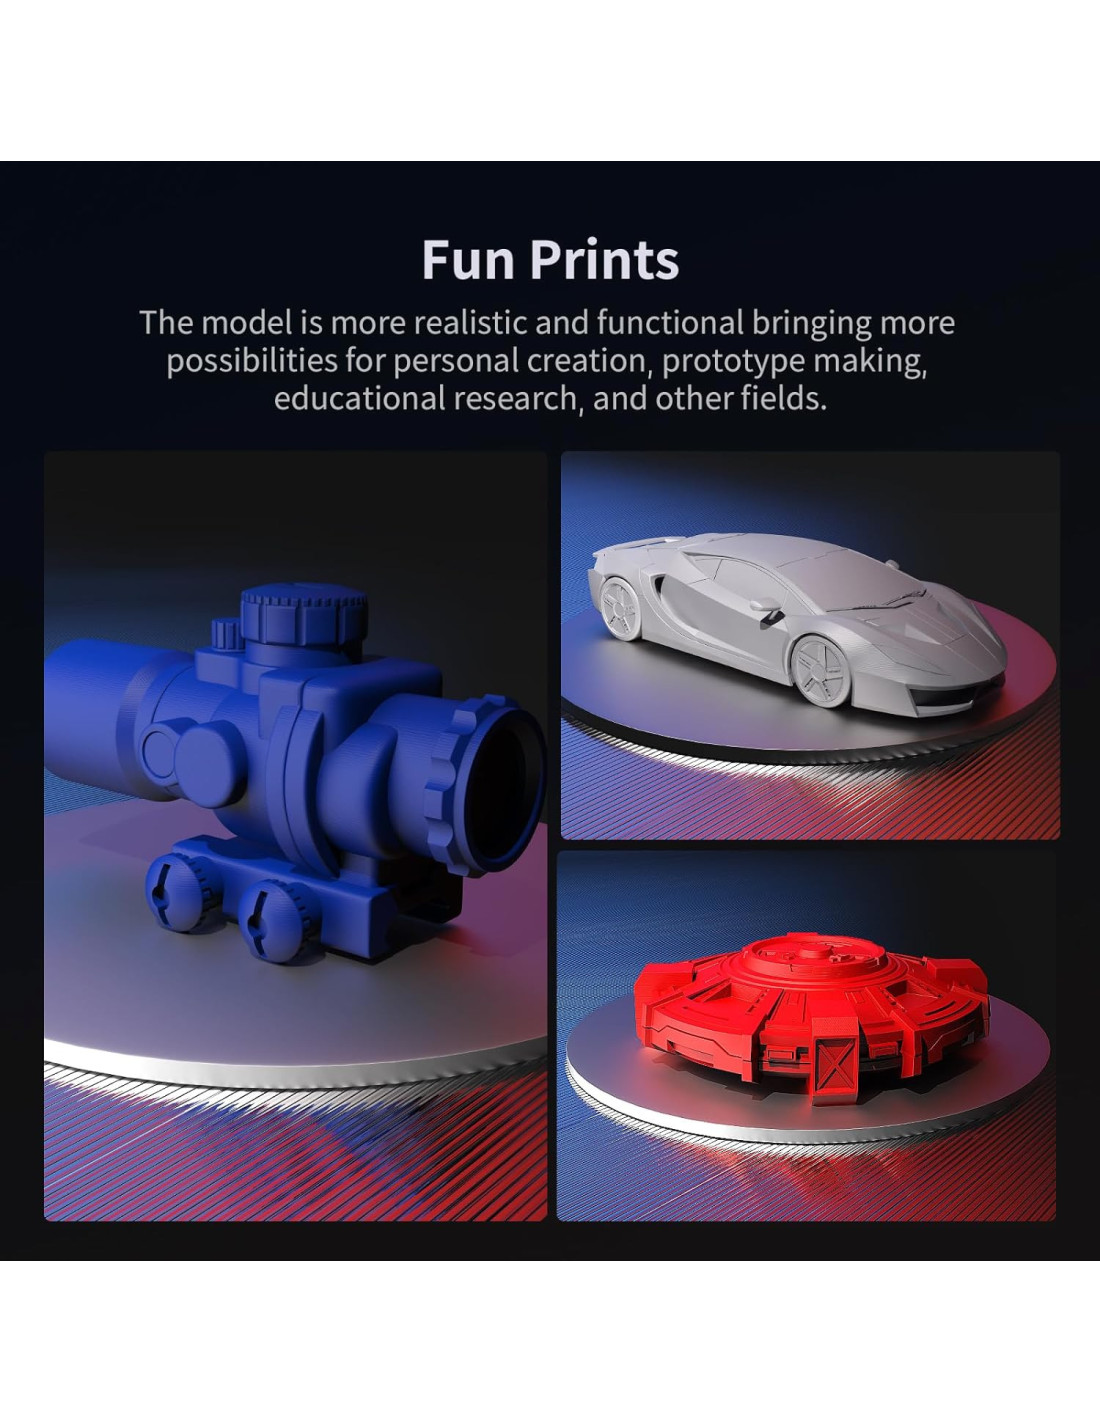 Anycubic Kobra 2 Pro - 3D-Drucker